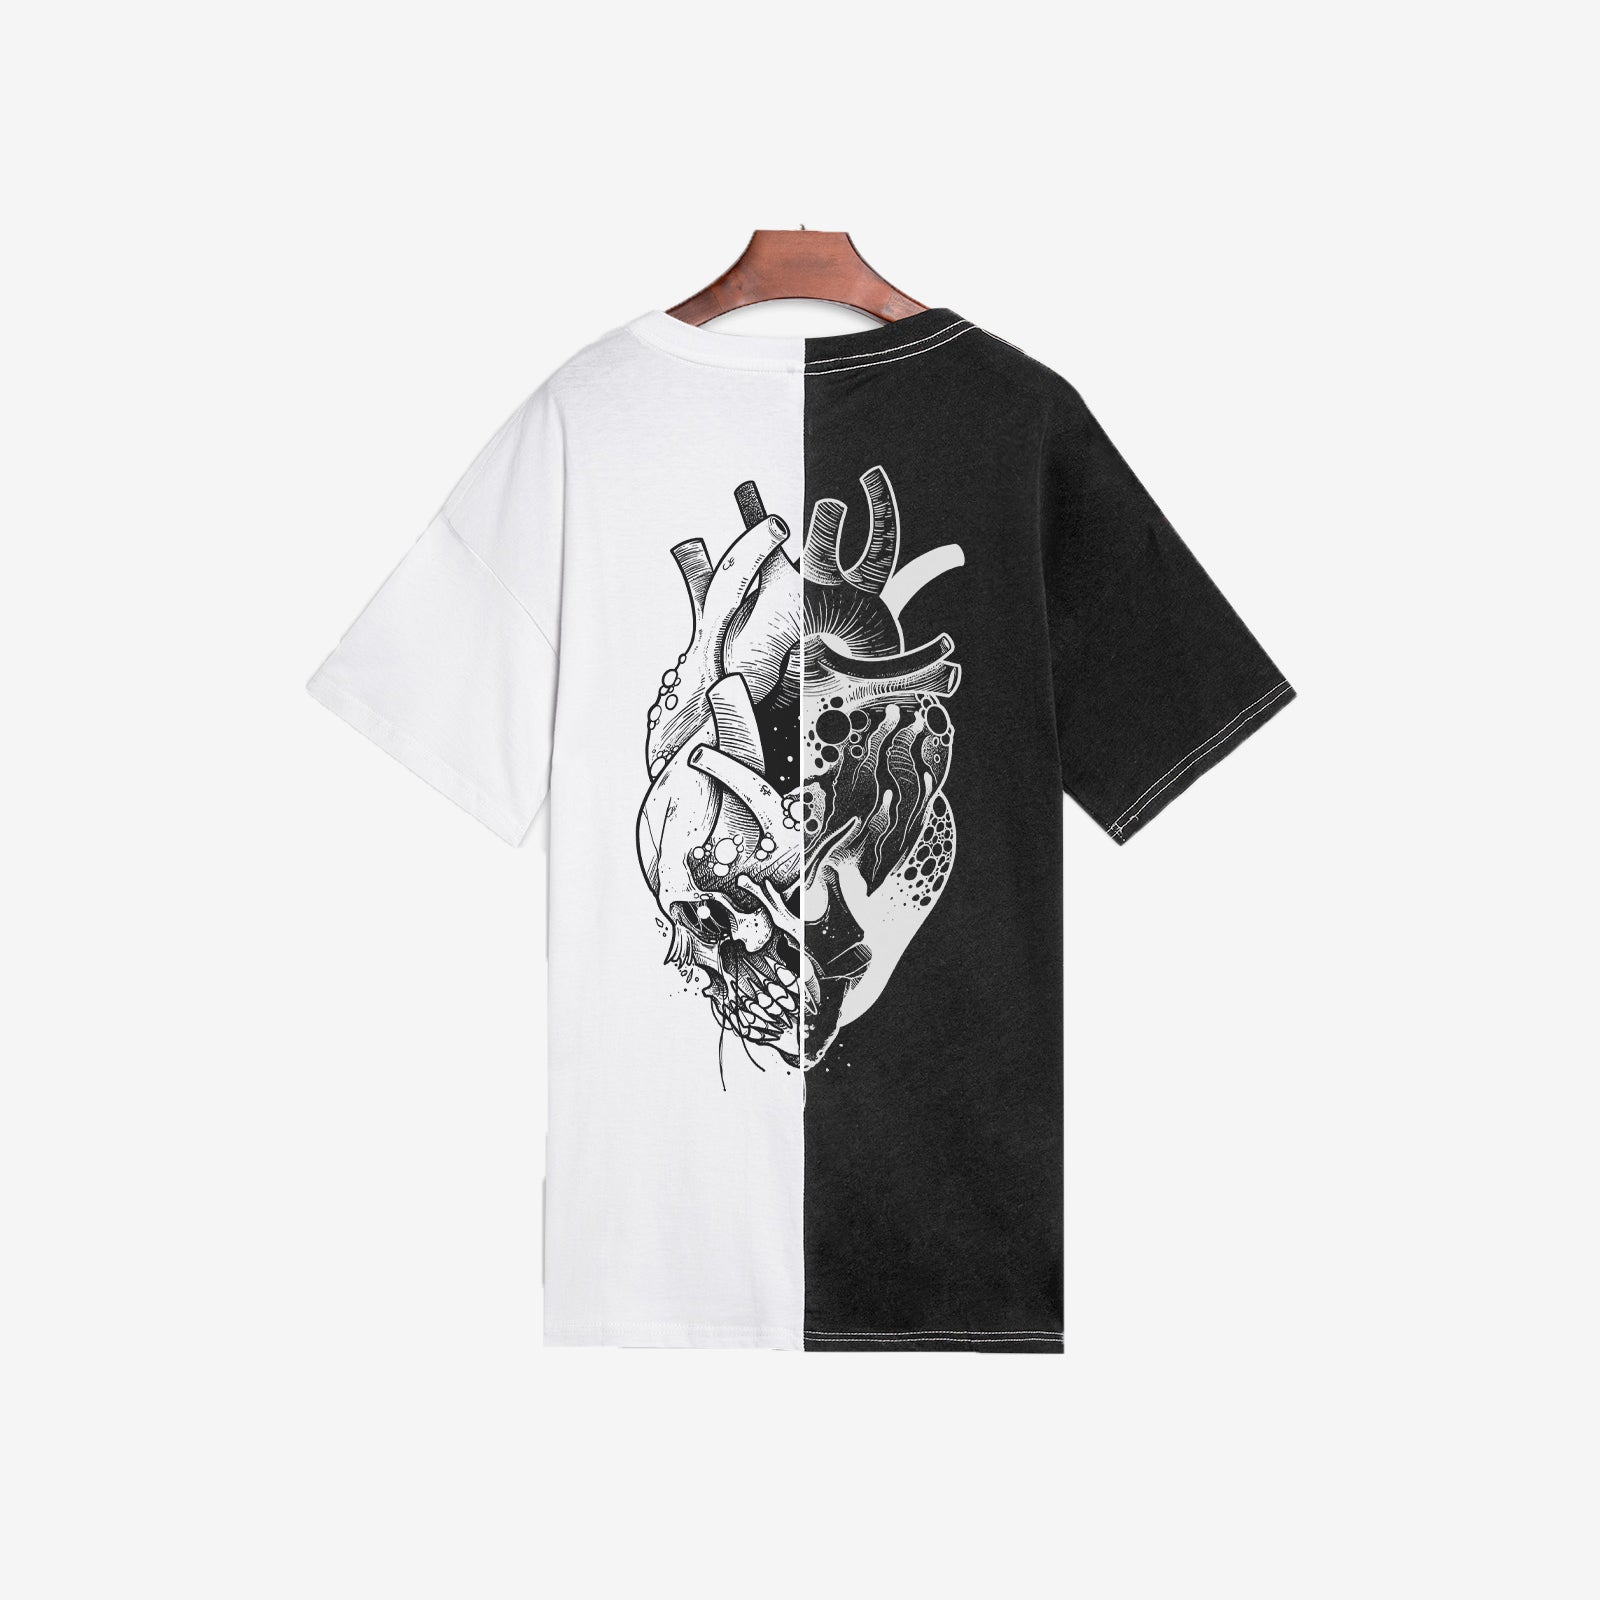 Minnieskull Black White Heart Skull Print T-Shirt